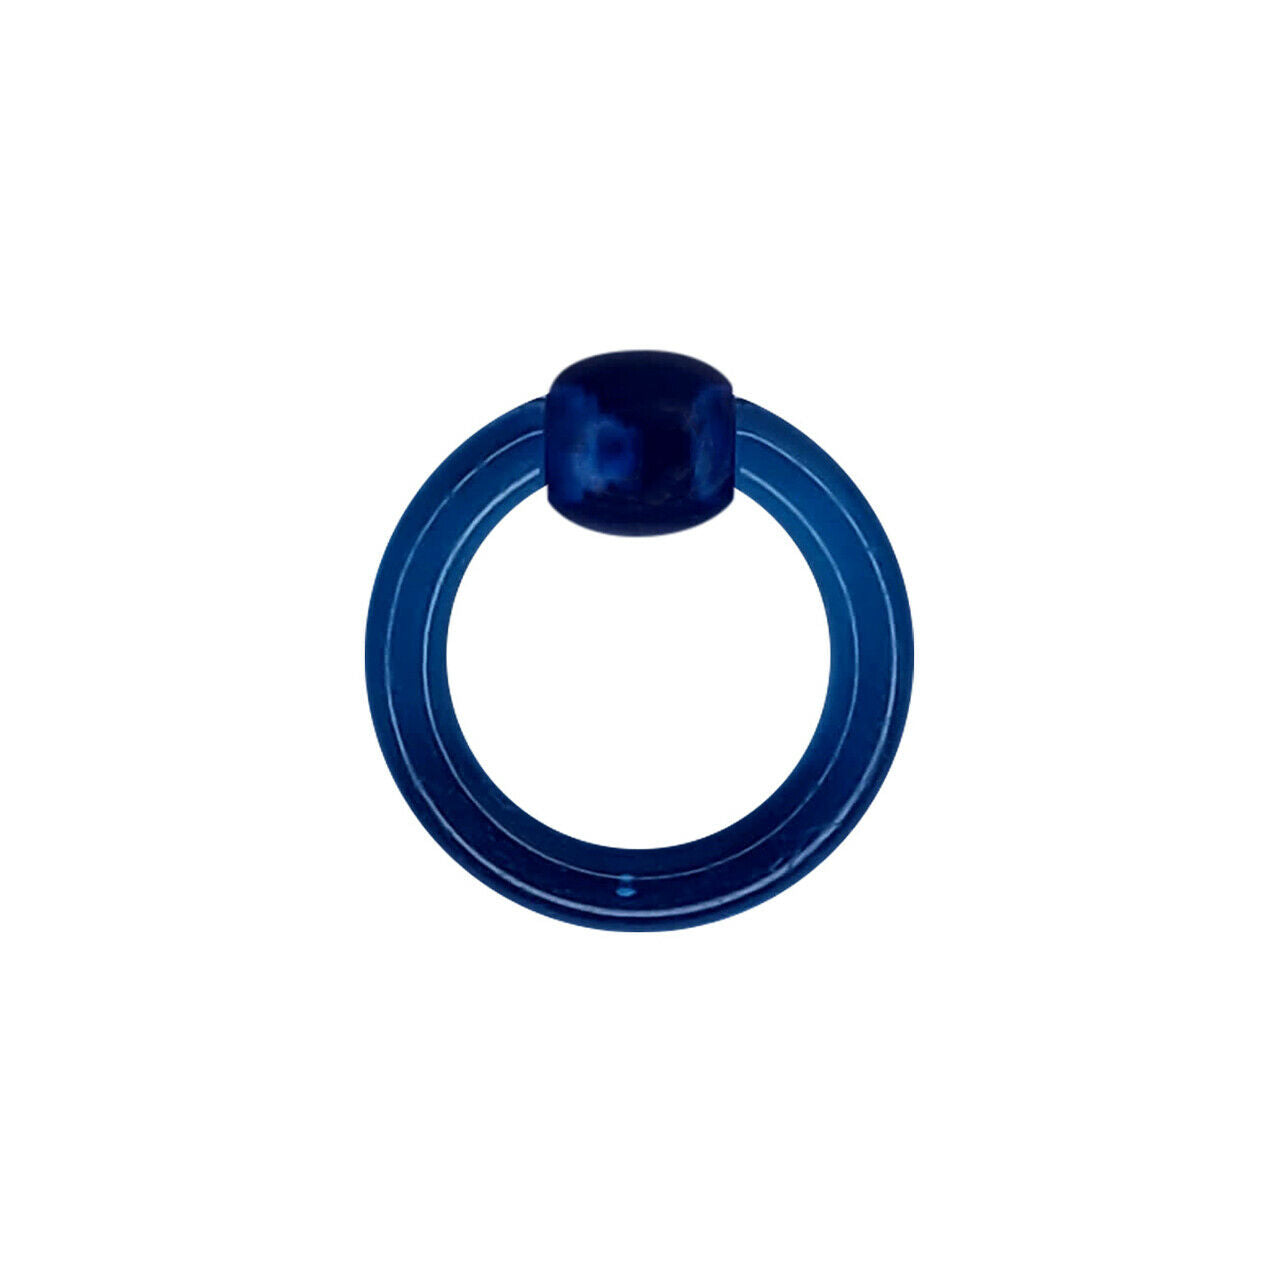 UV Neon Acrylic Circular Captive Bead Ring 10g - Sold as a Pair